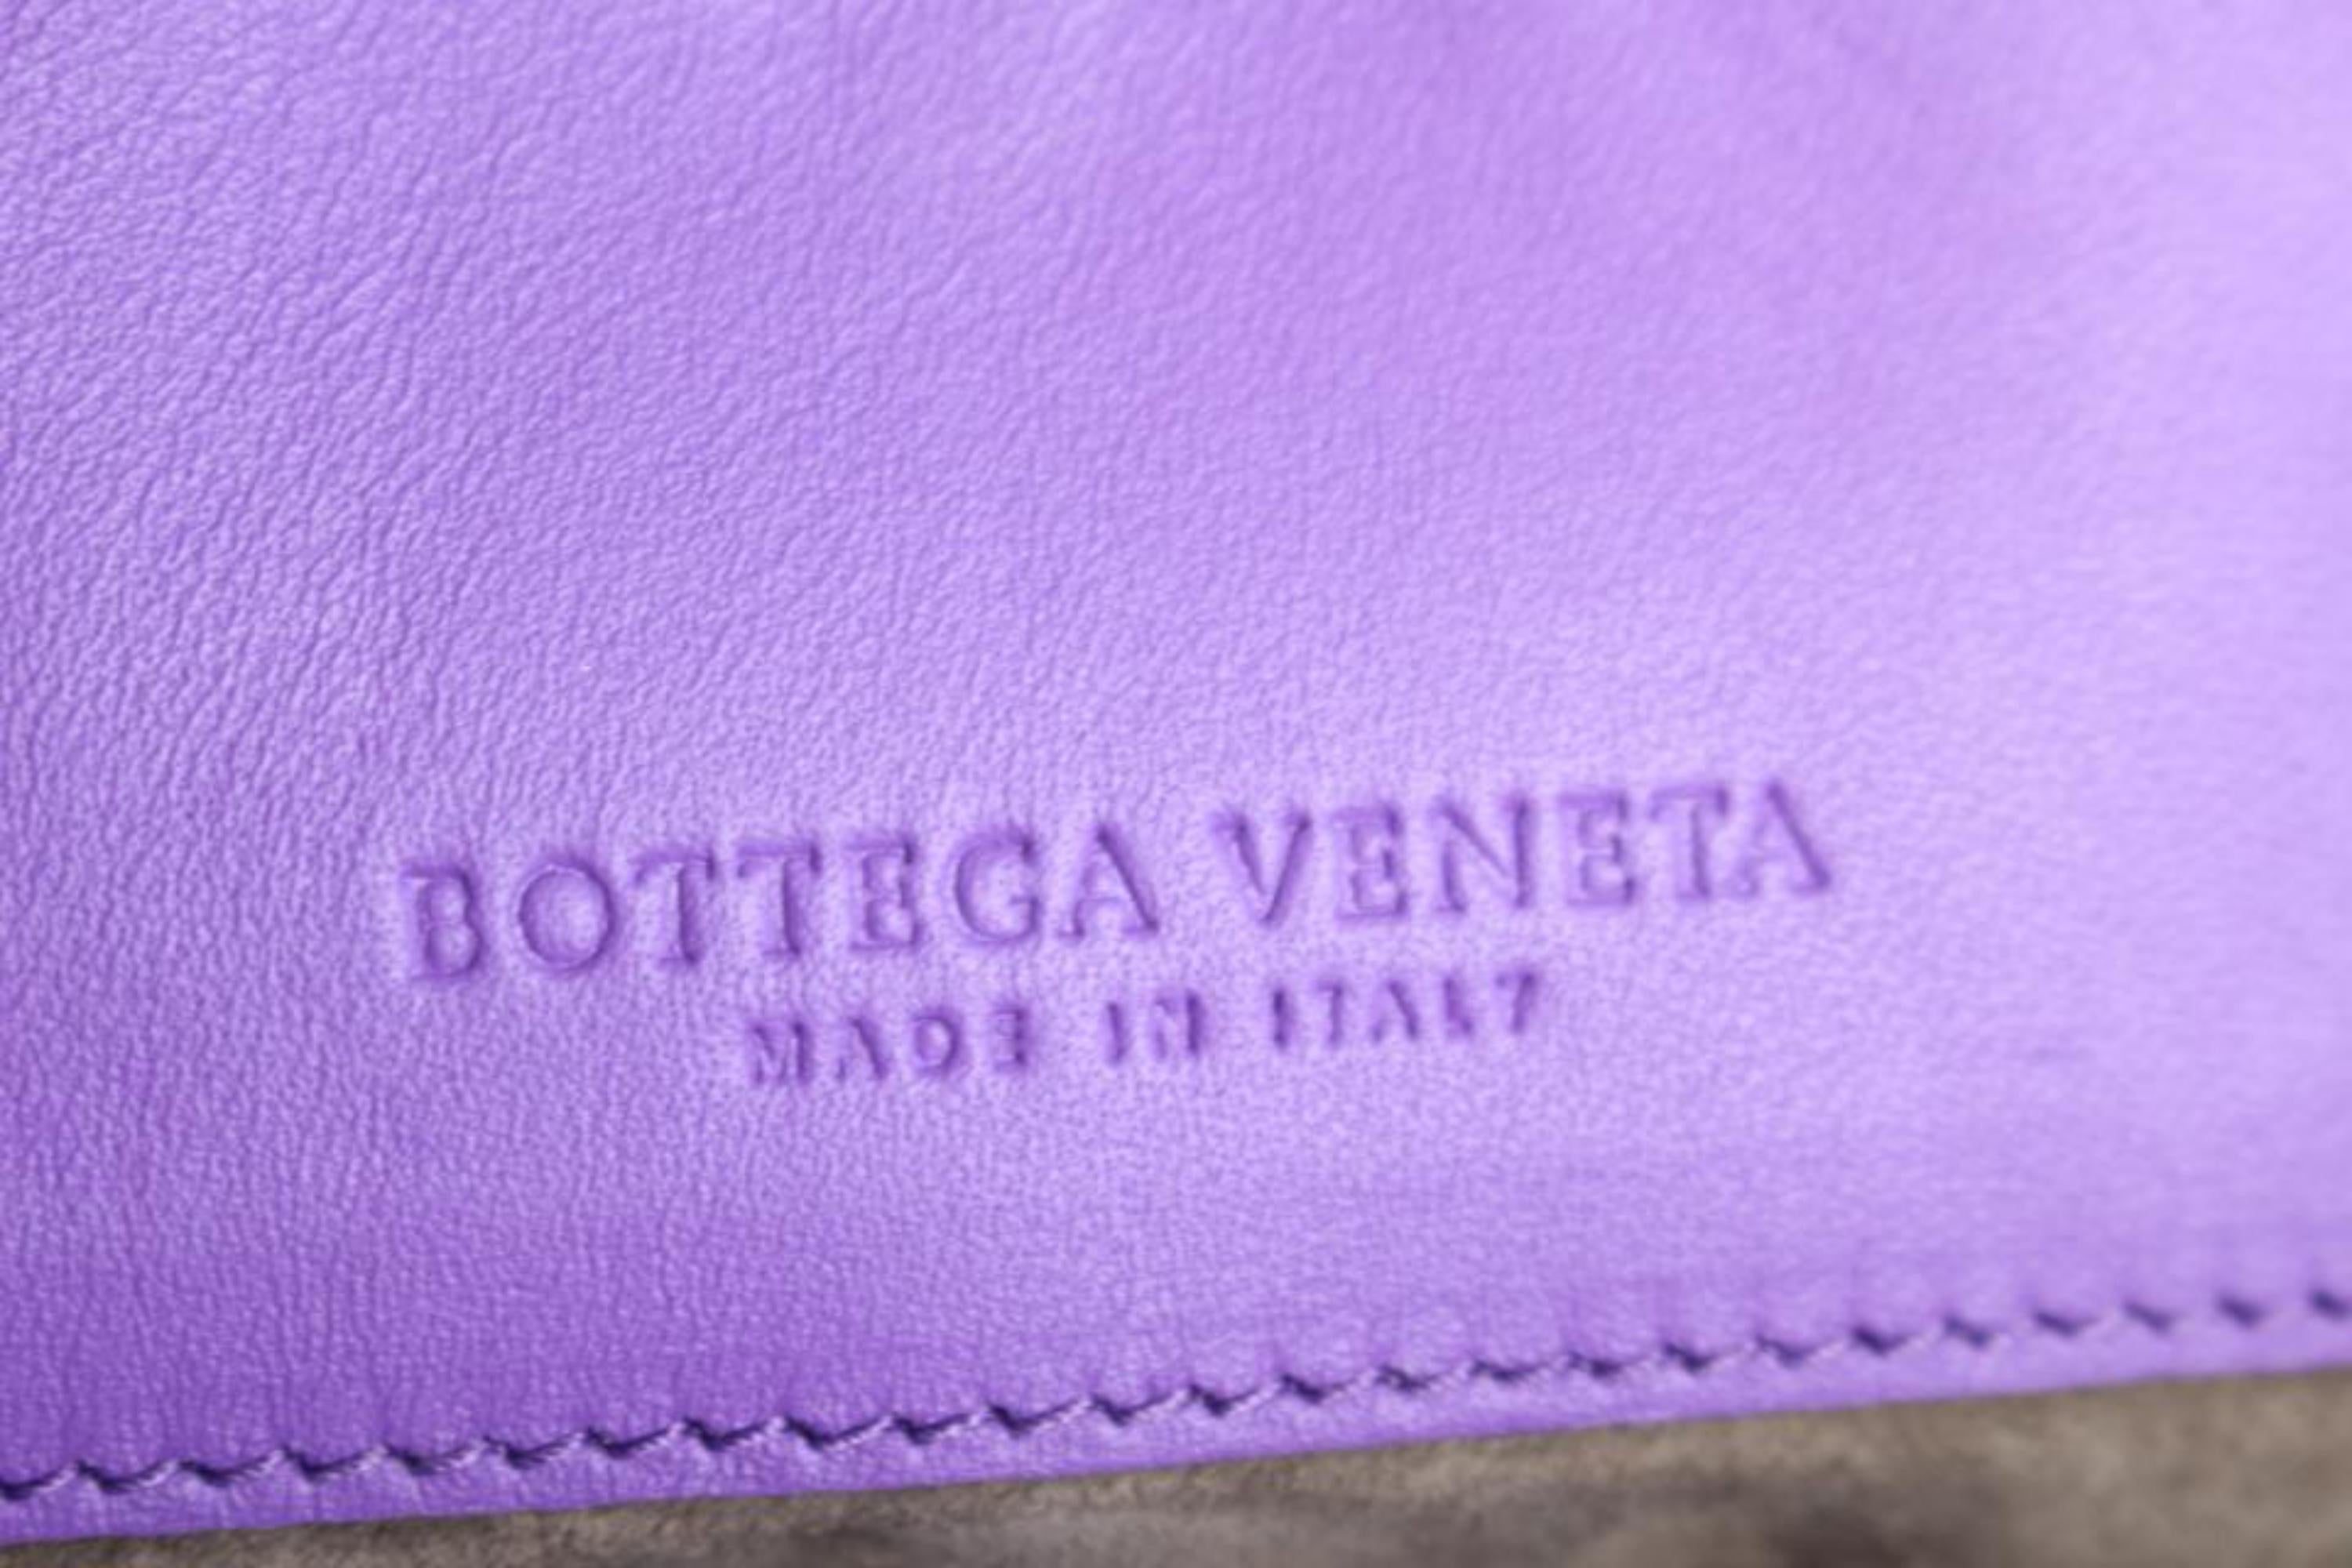 Bottega Veneta Olimpia Medium Napa Chain Flap 10mz0828 Purple Leather Cross Body In Excellent Condition For Sale In Forest Hills, NY